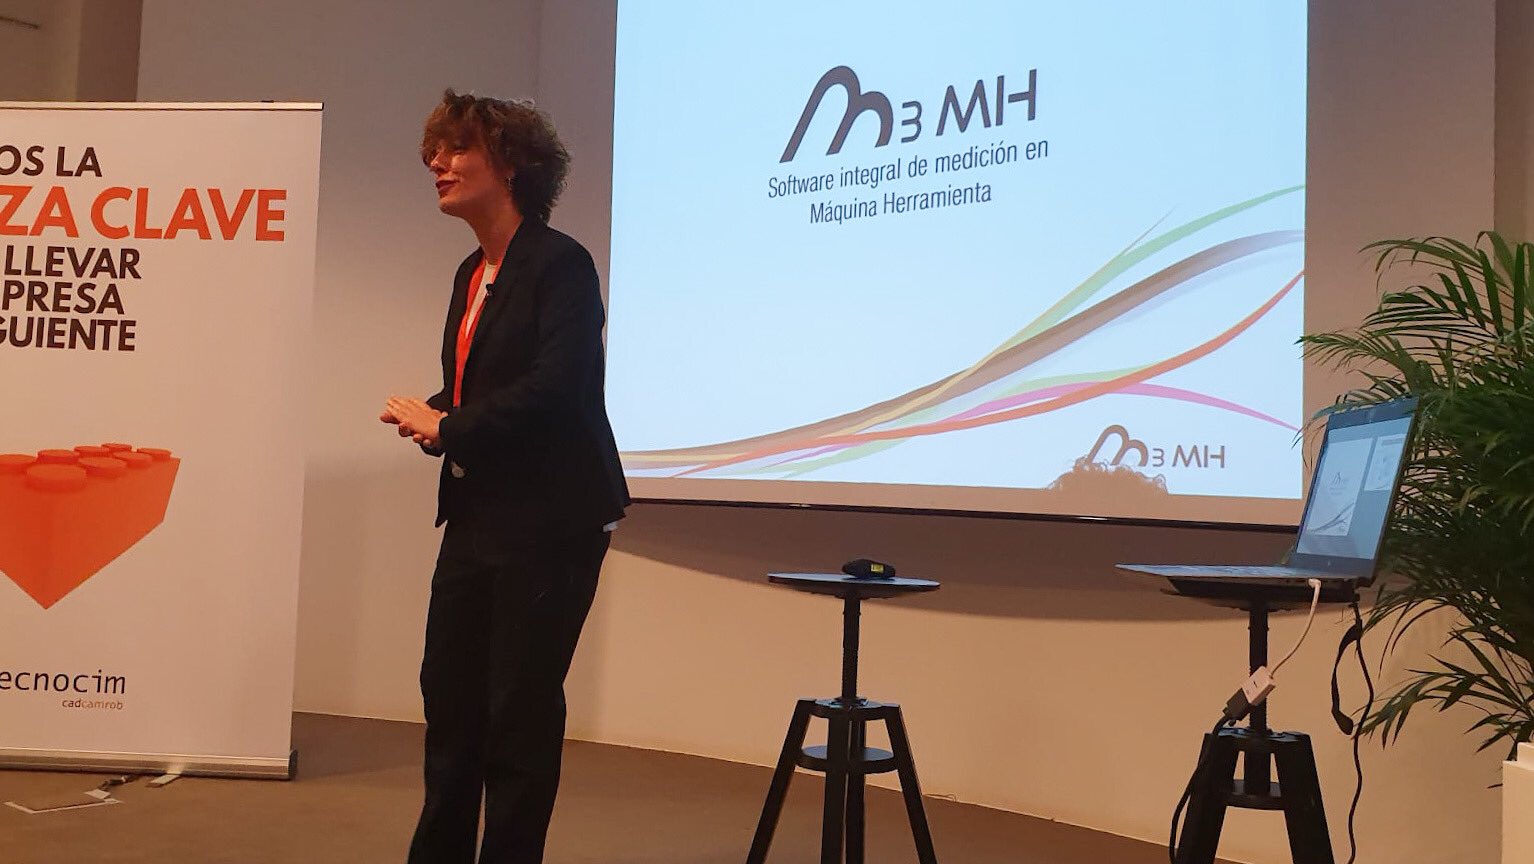 Innovalia Metrology präsentiert M3MH in 4 verschiedenen Städten dank der Tecnocim-Workshops